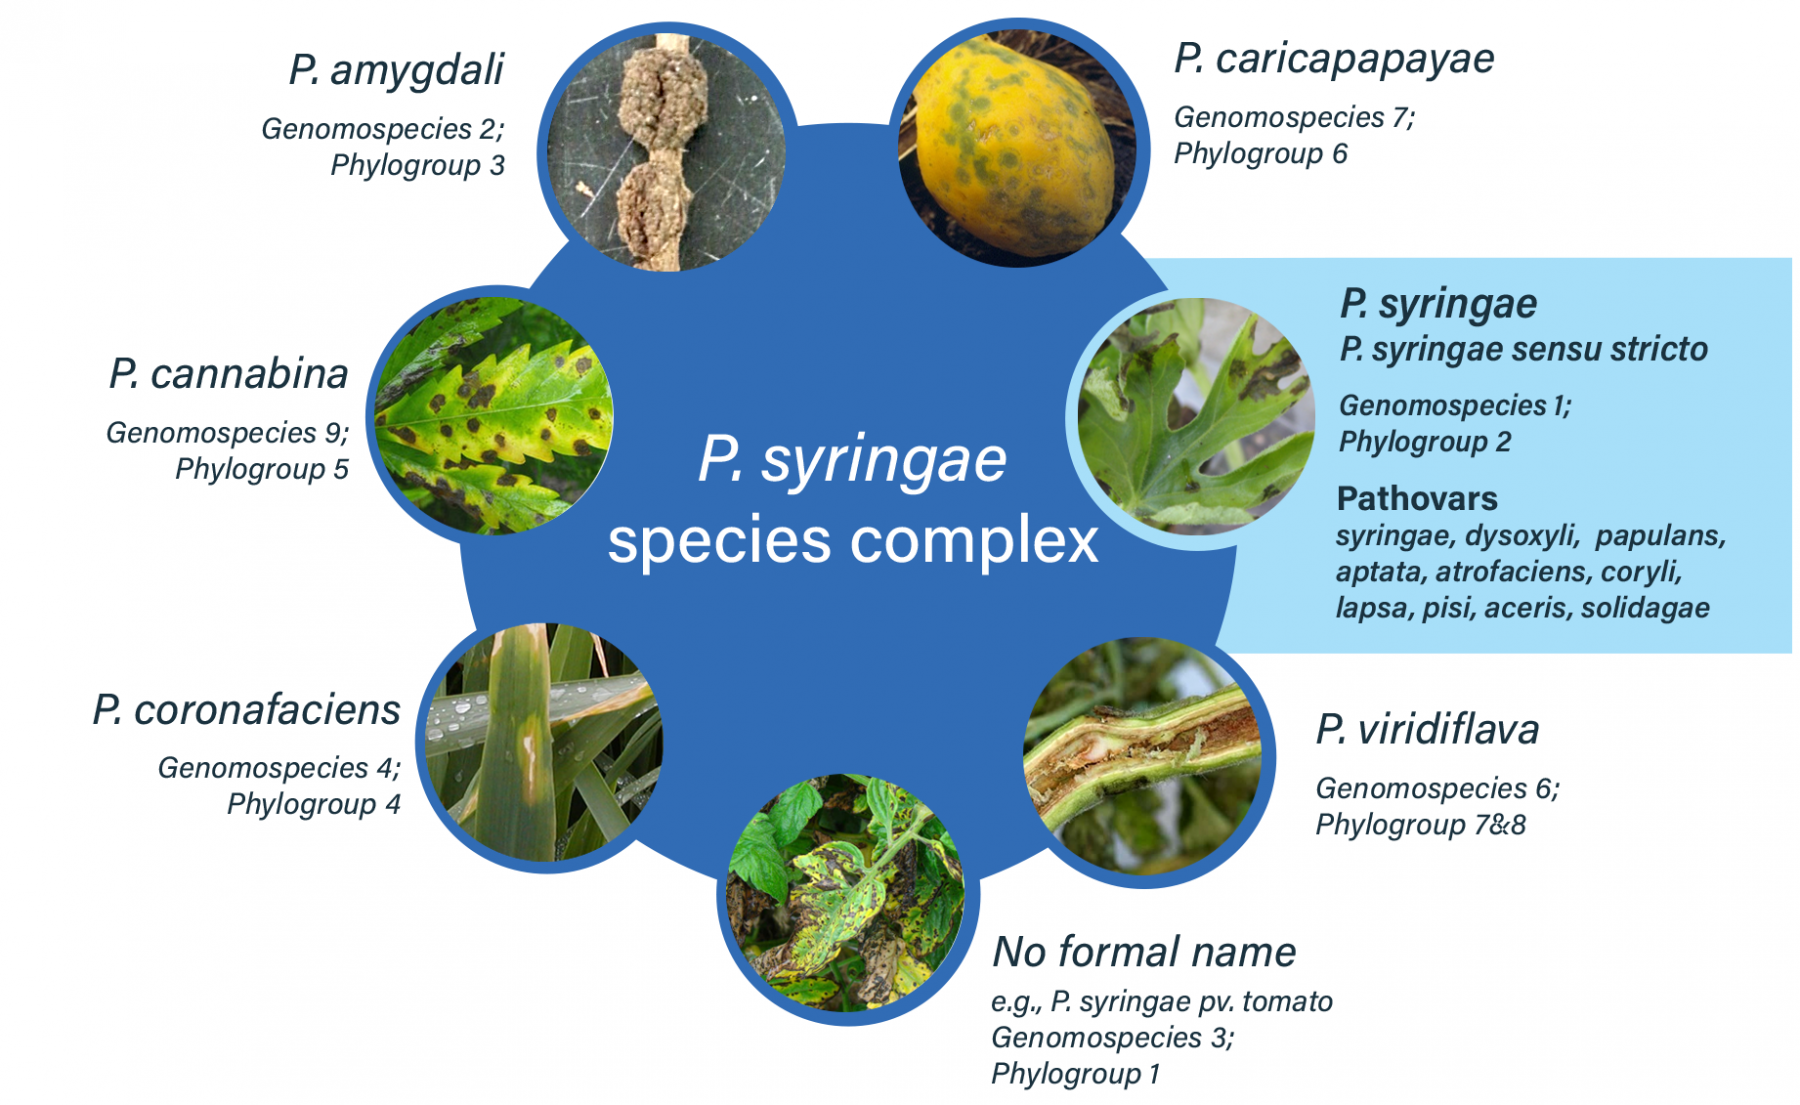 The Pseudomonas syringae species complex. Cucurbit pathogens belong to P. syringae sensu stricto, which we refer to as P. syringae.